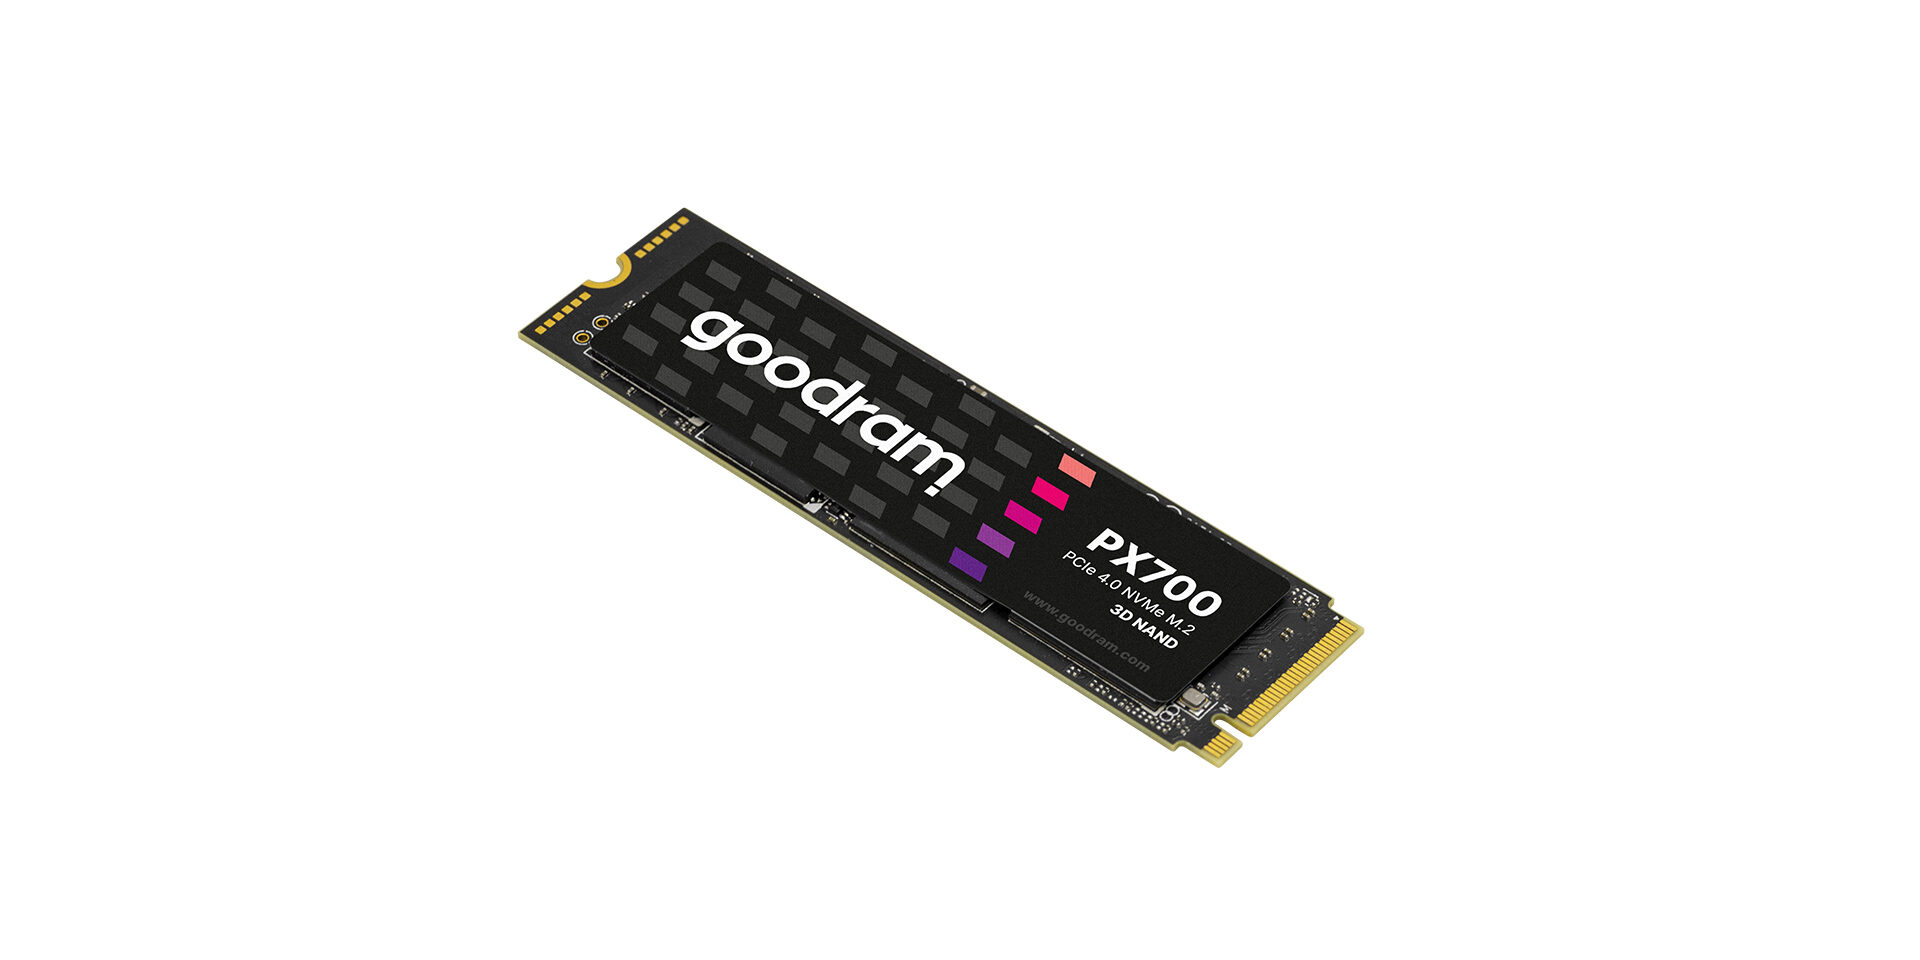 Goodram PX700 SSD